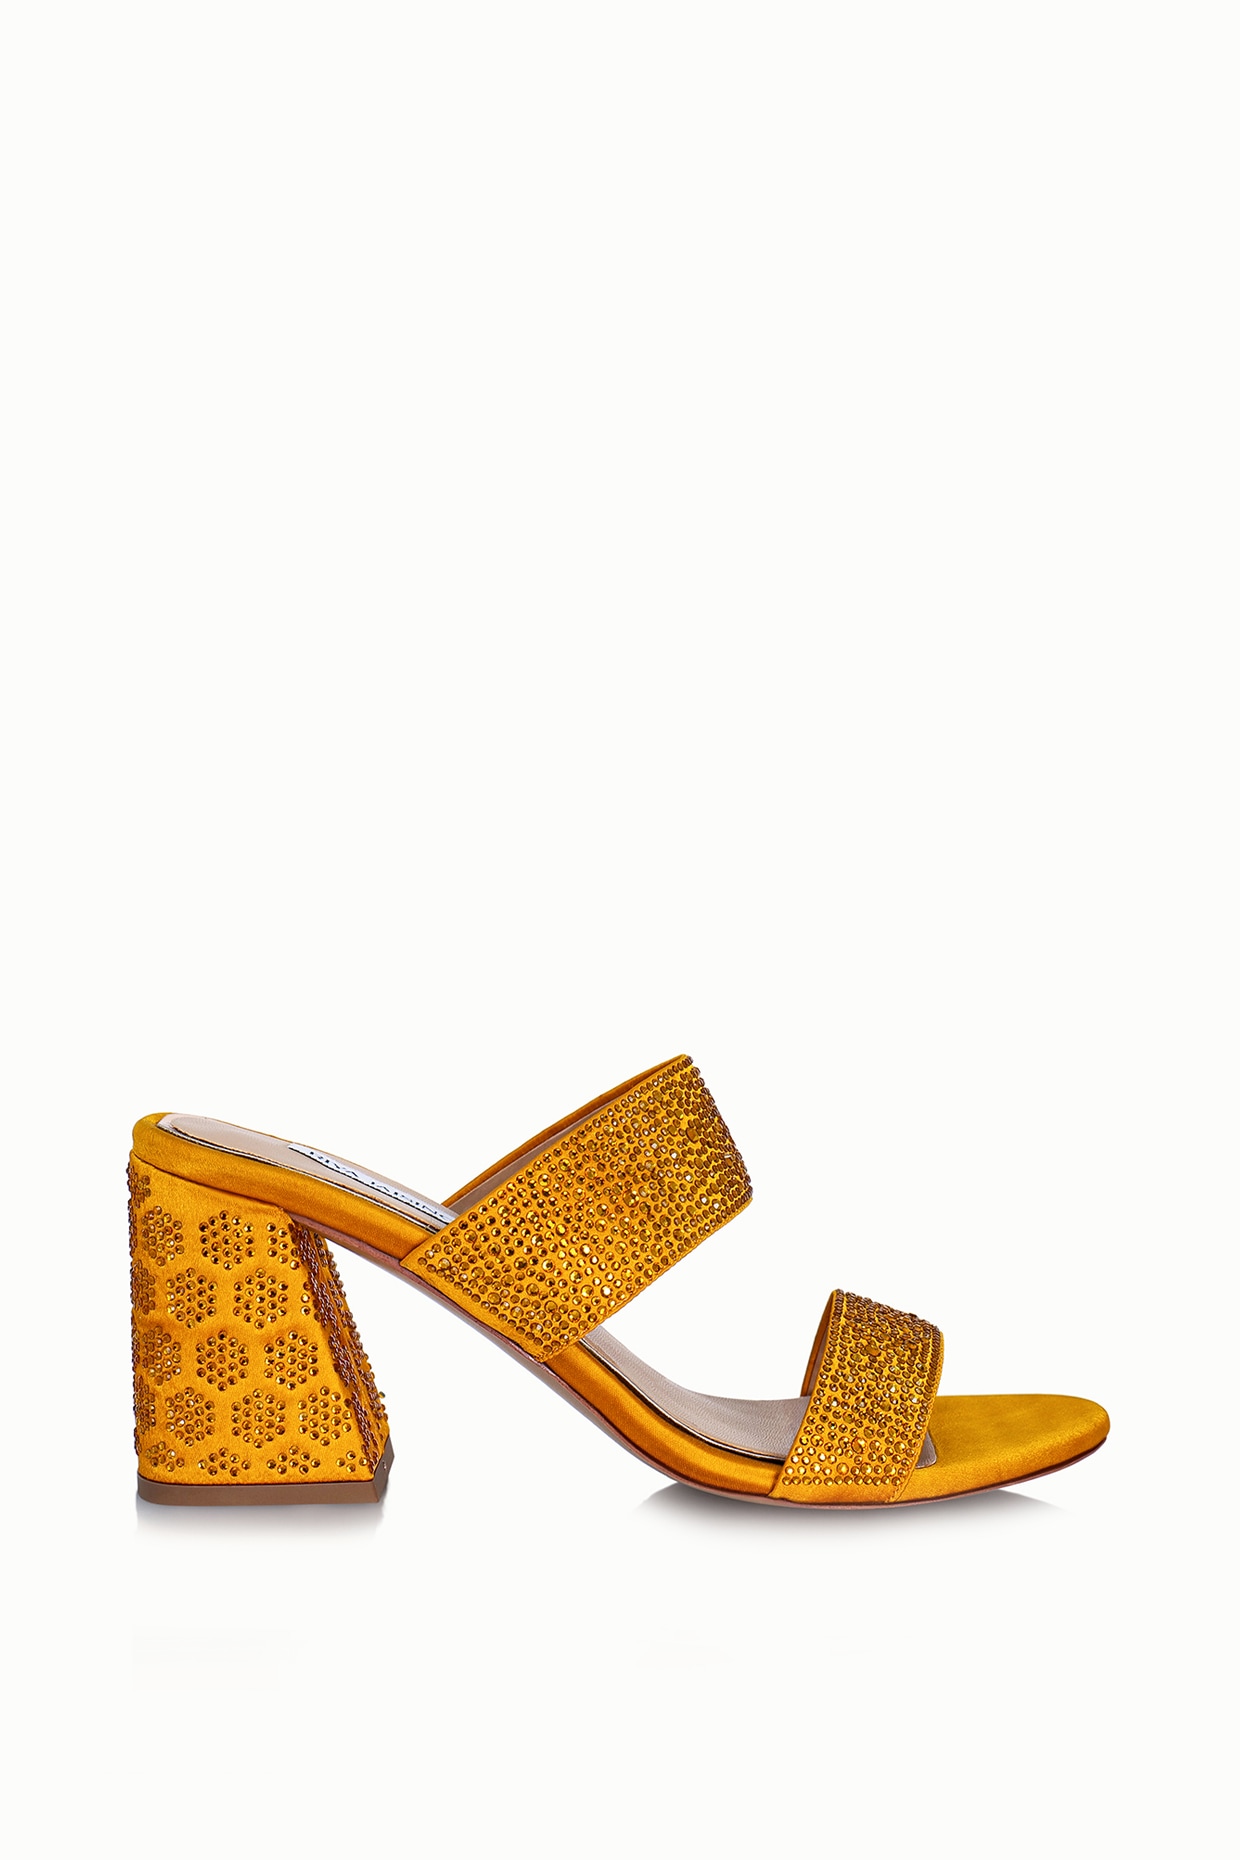 Baghera Sandals | Yellow | Fashionkind